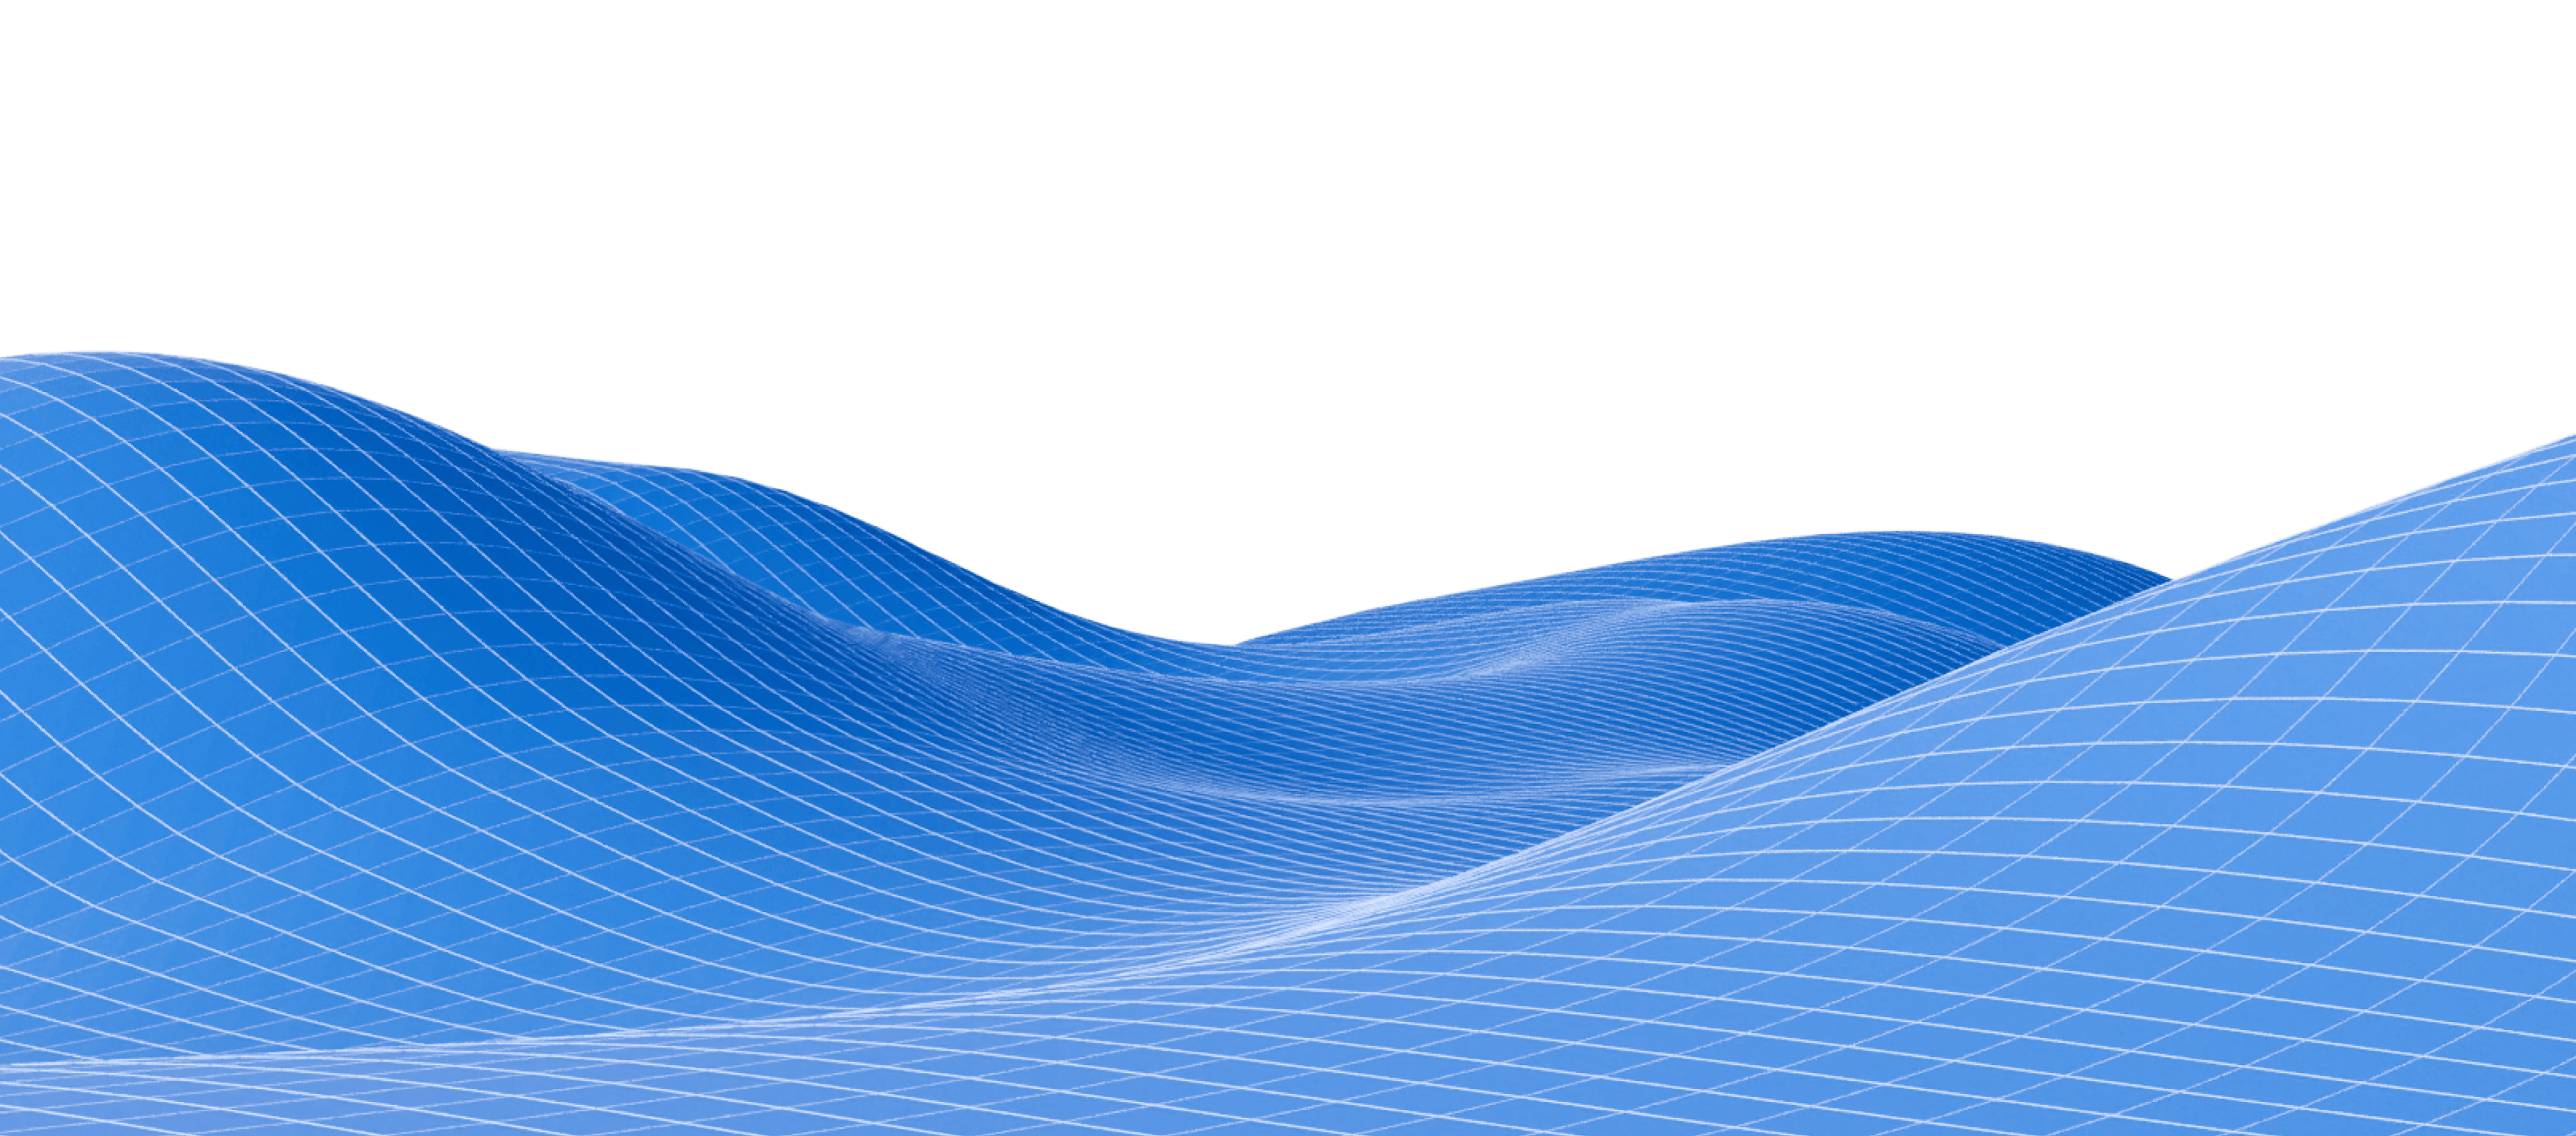 Waves background